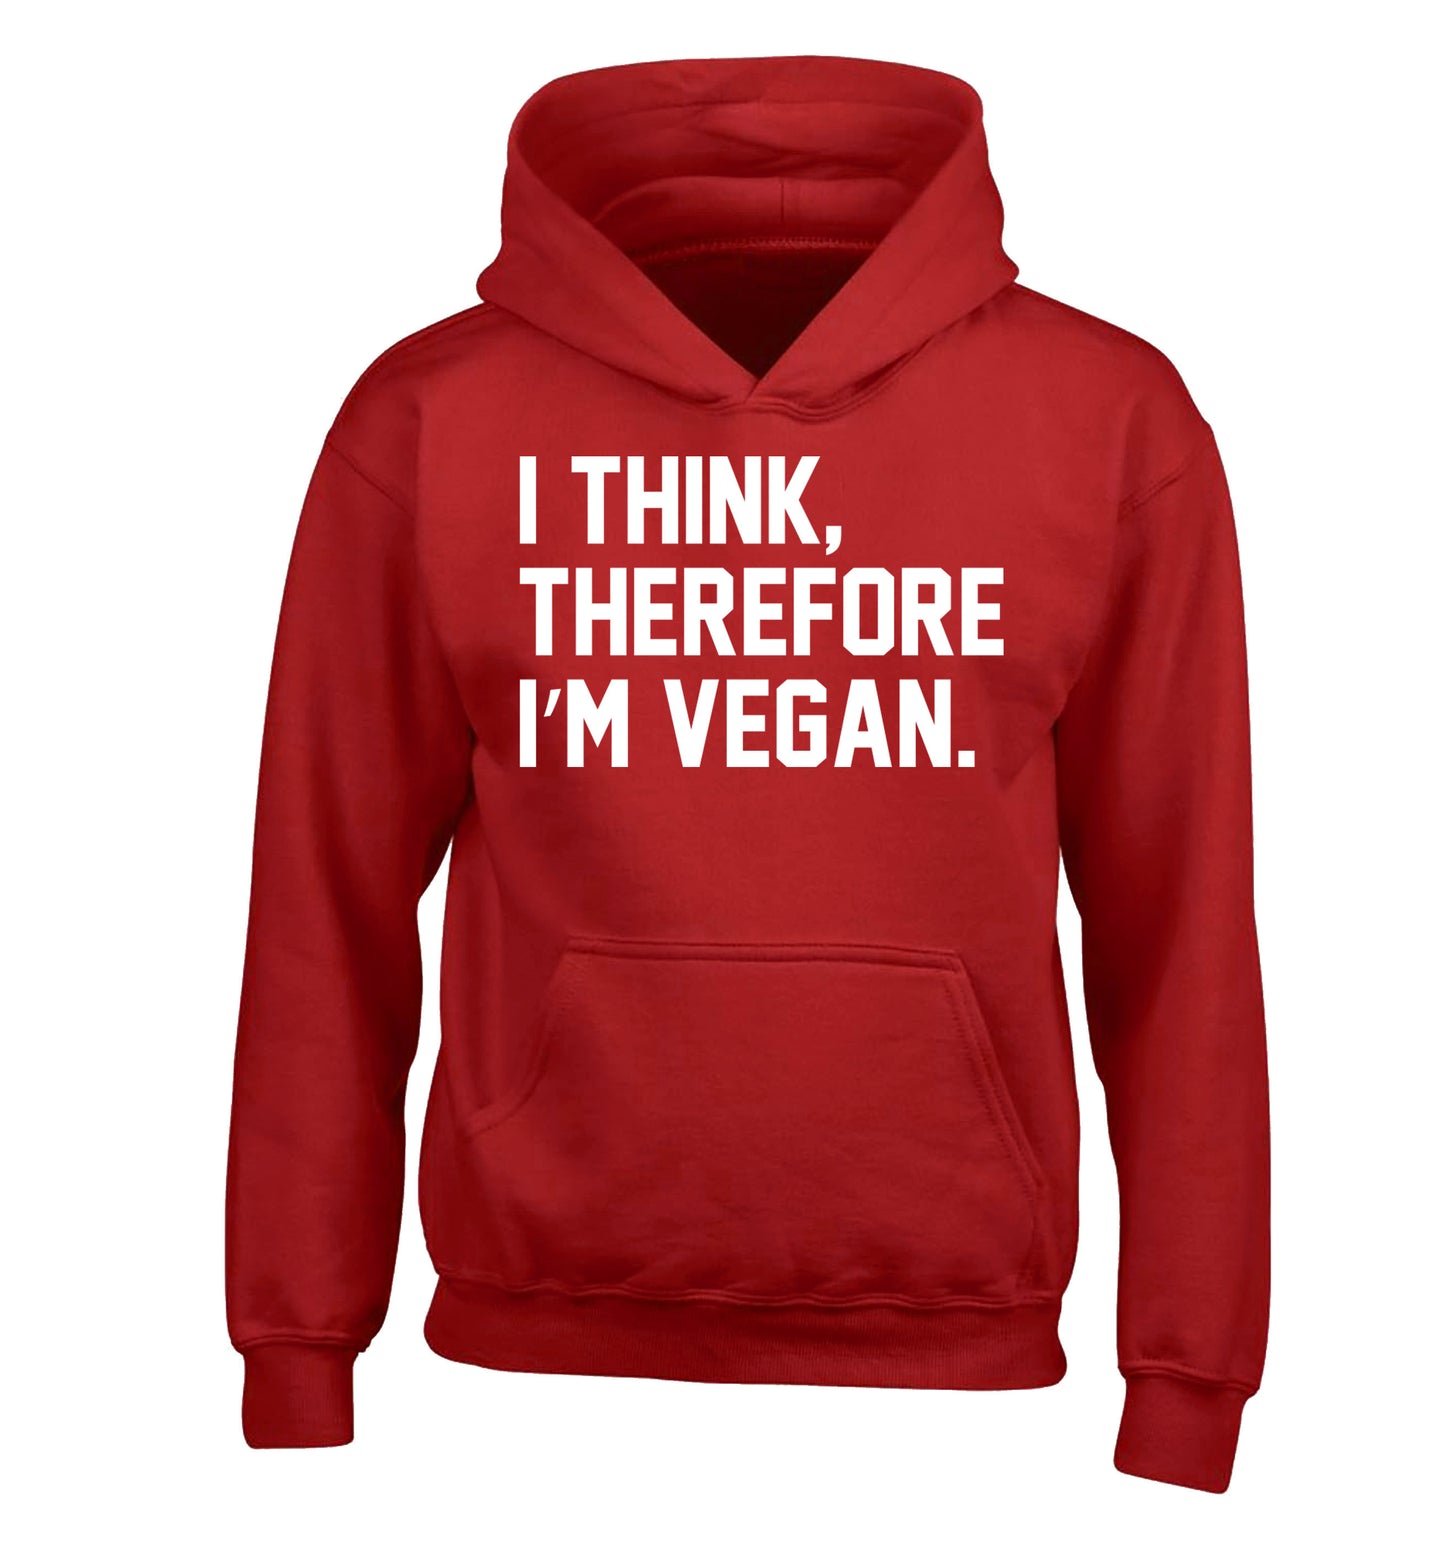 I think therefore I'm vegan children's red hoodie 12-14 Years